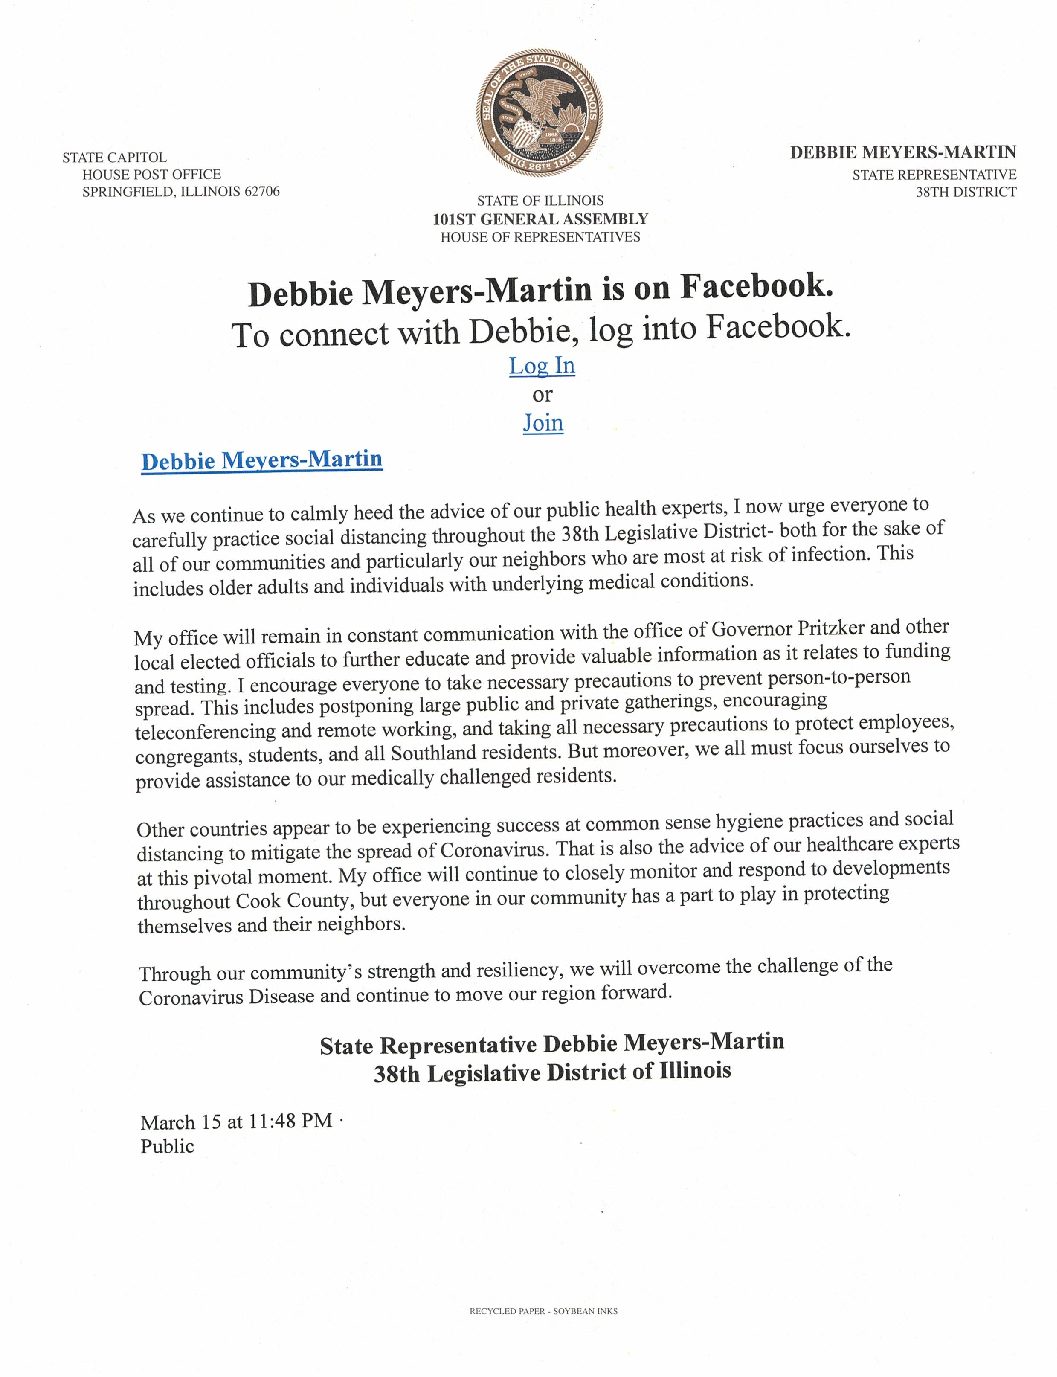 Debbie Meyers-Martin Corona Virus Announcement